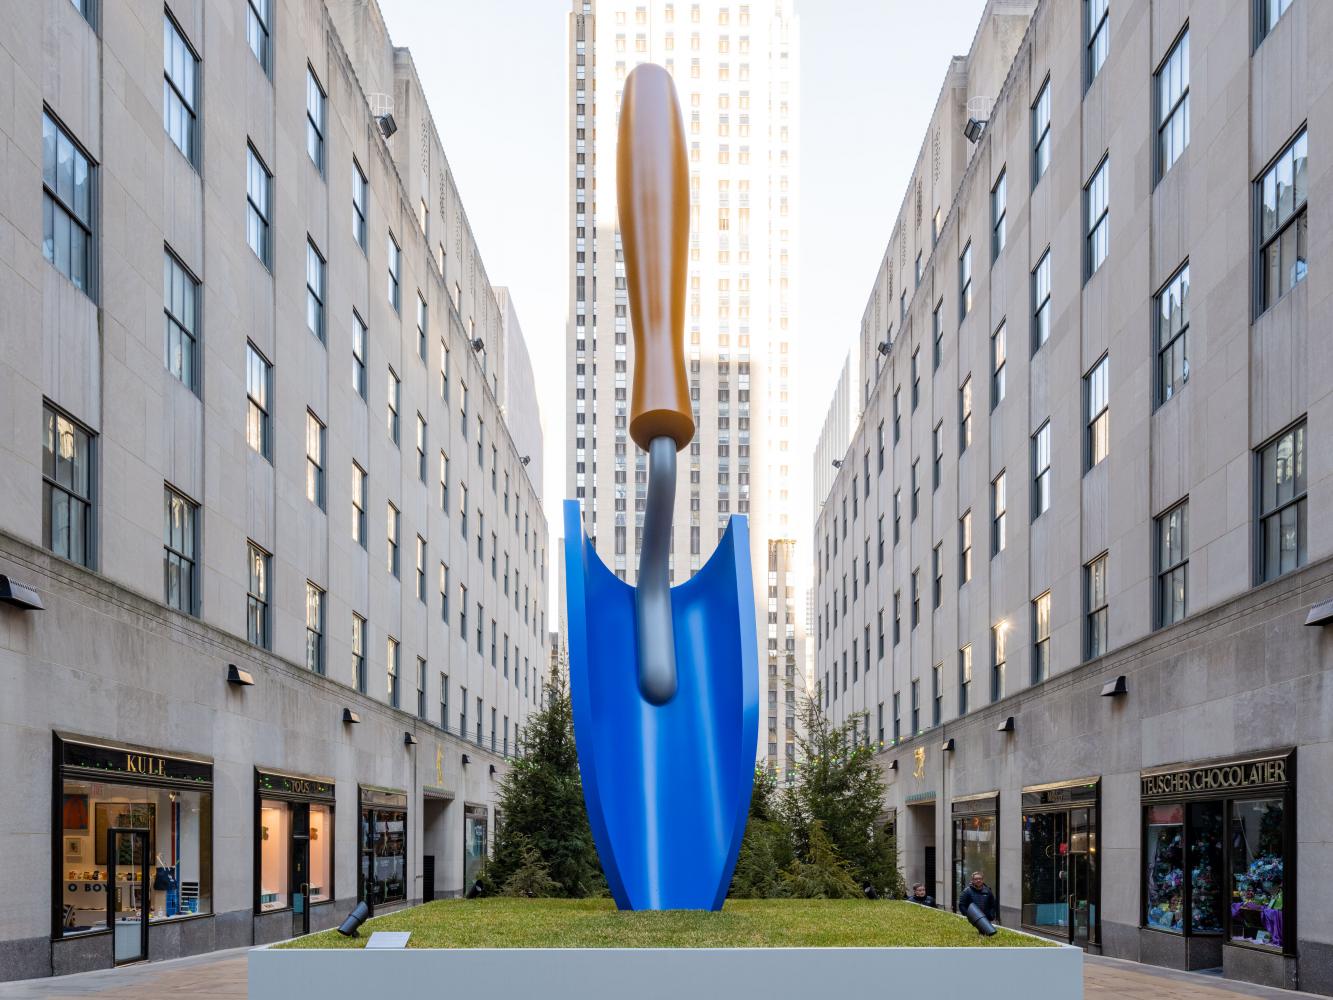 Claes Oldenburg & Coosje van Bruggen "Plantoir, Blue", 2001-2021, Rockefeller Center, New York 